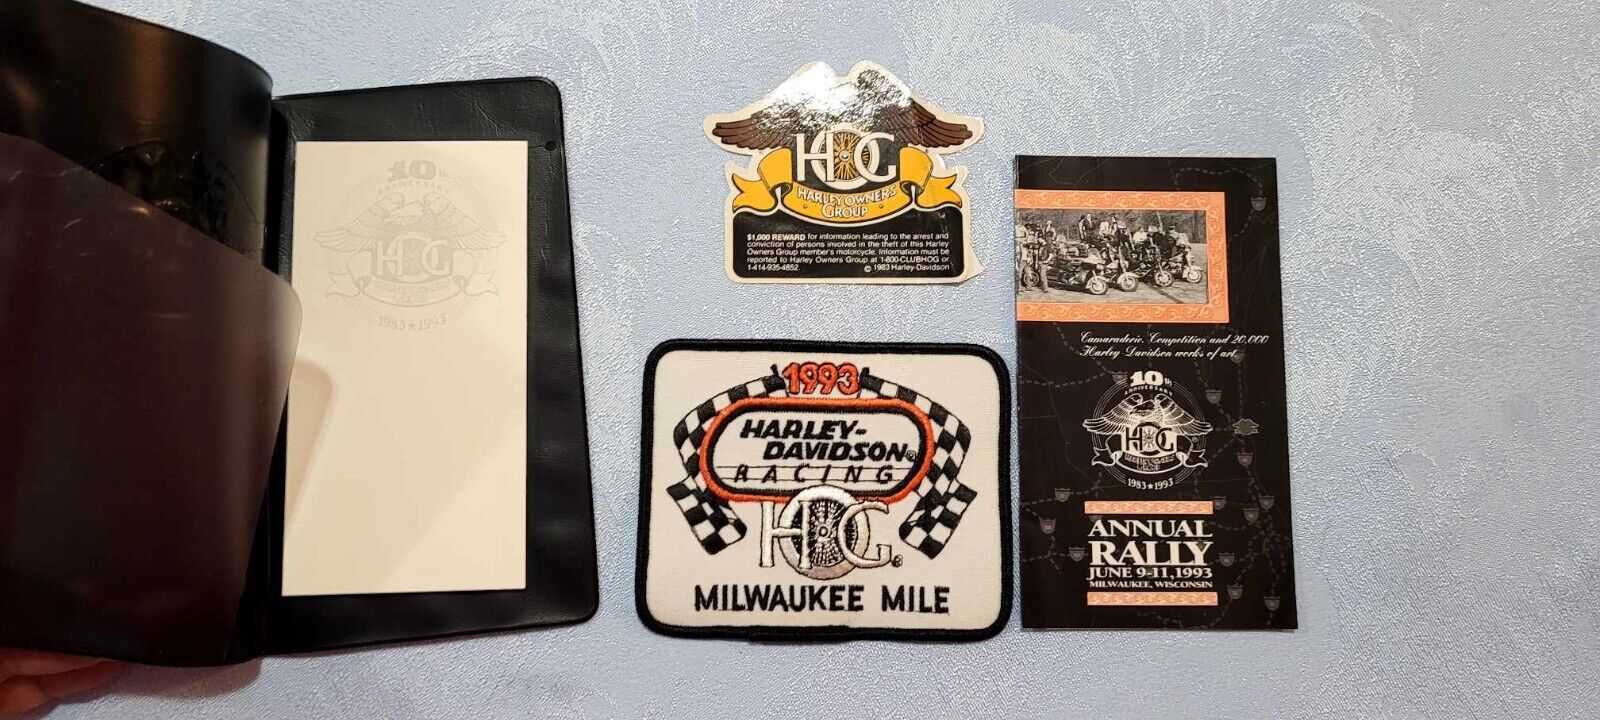 HOG Vintage 1993 Harley Davidson Racing Milwaukee Mile Patch pad sticker as seen